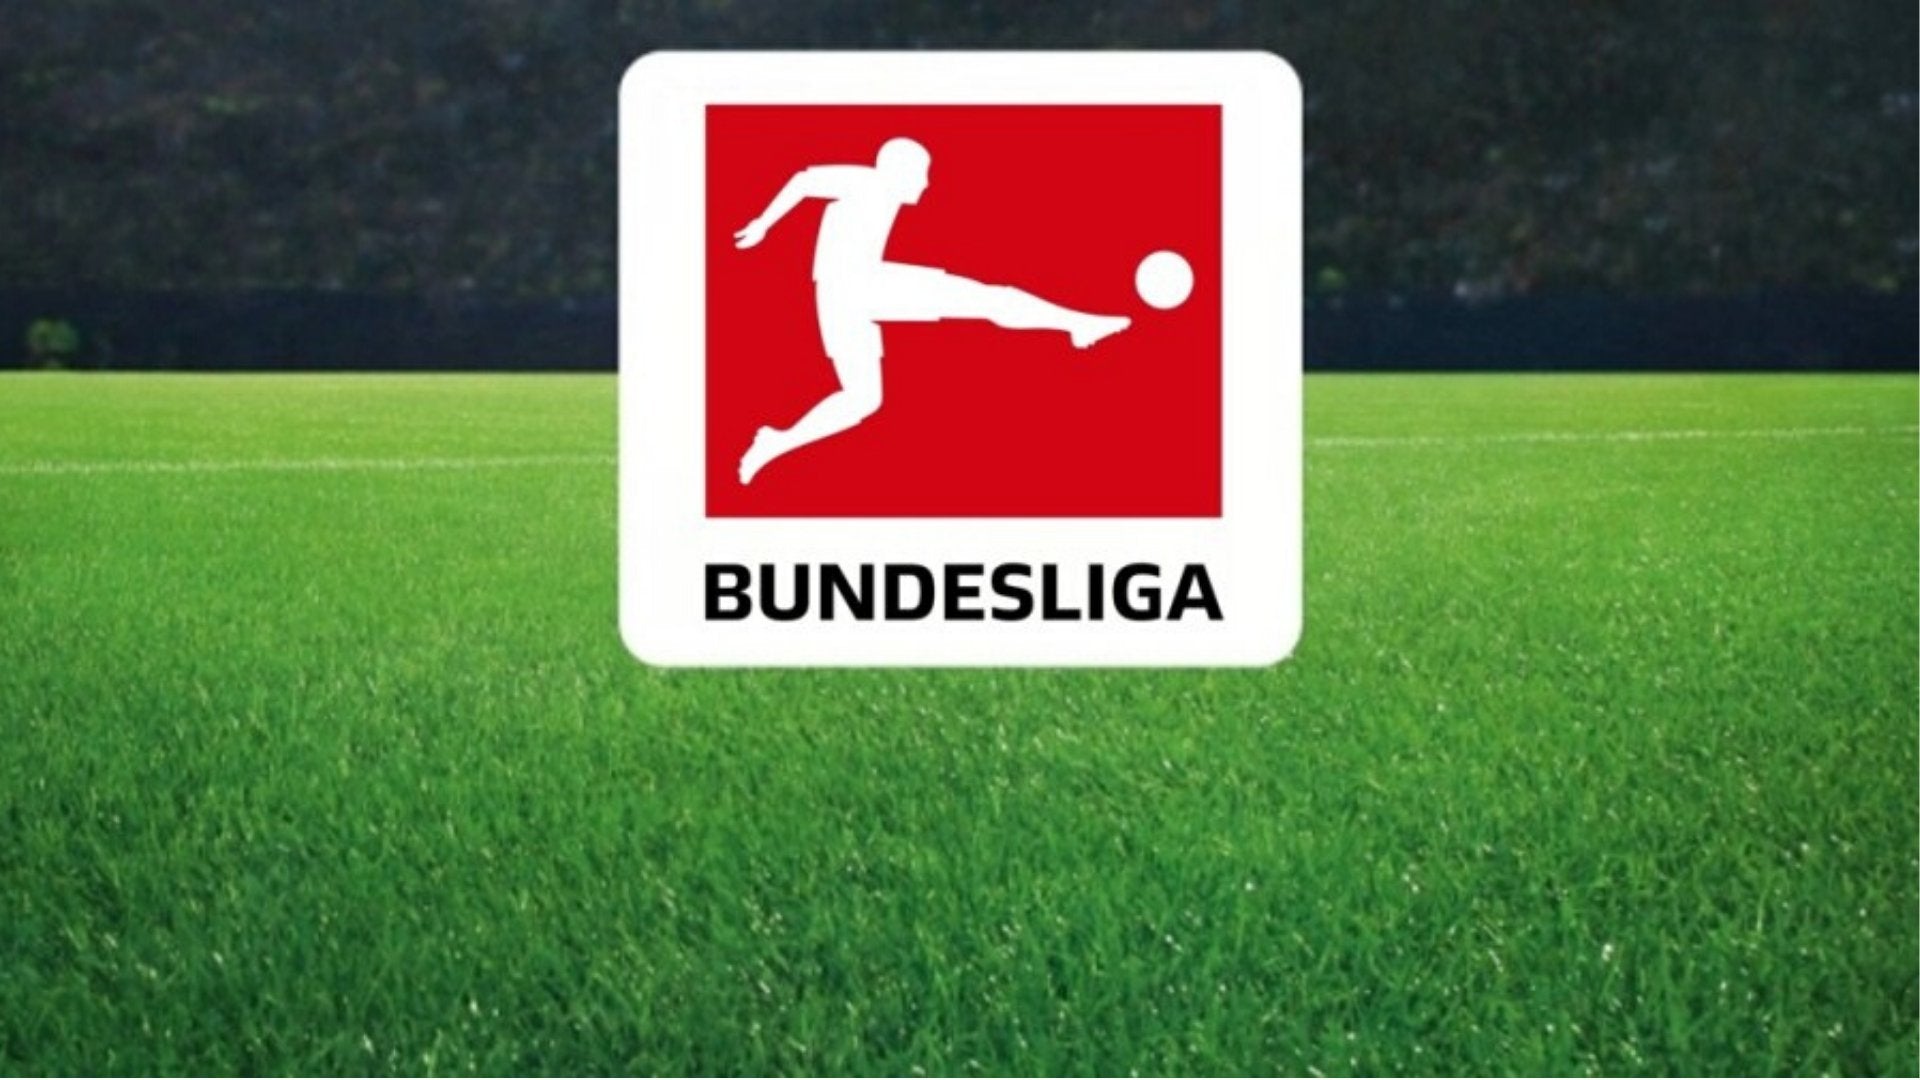 Germany League - uaessss